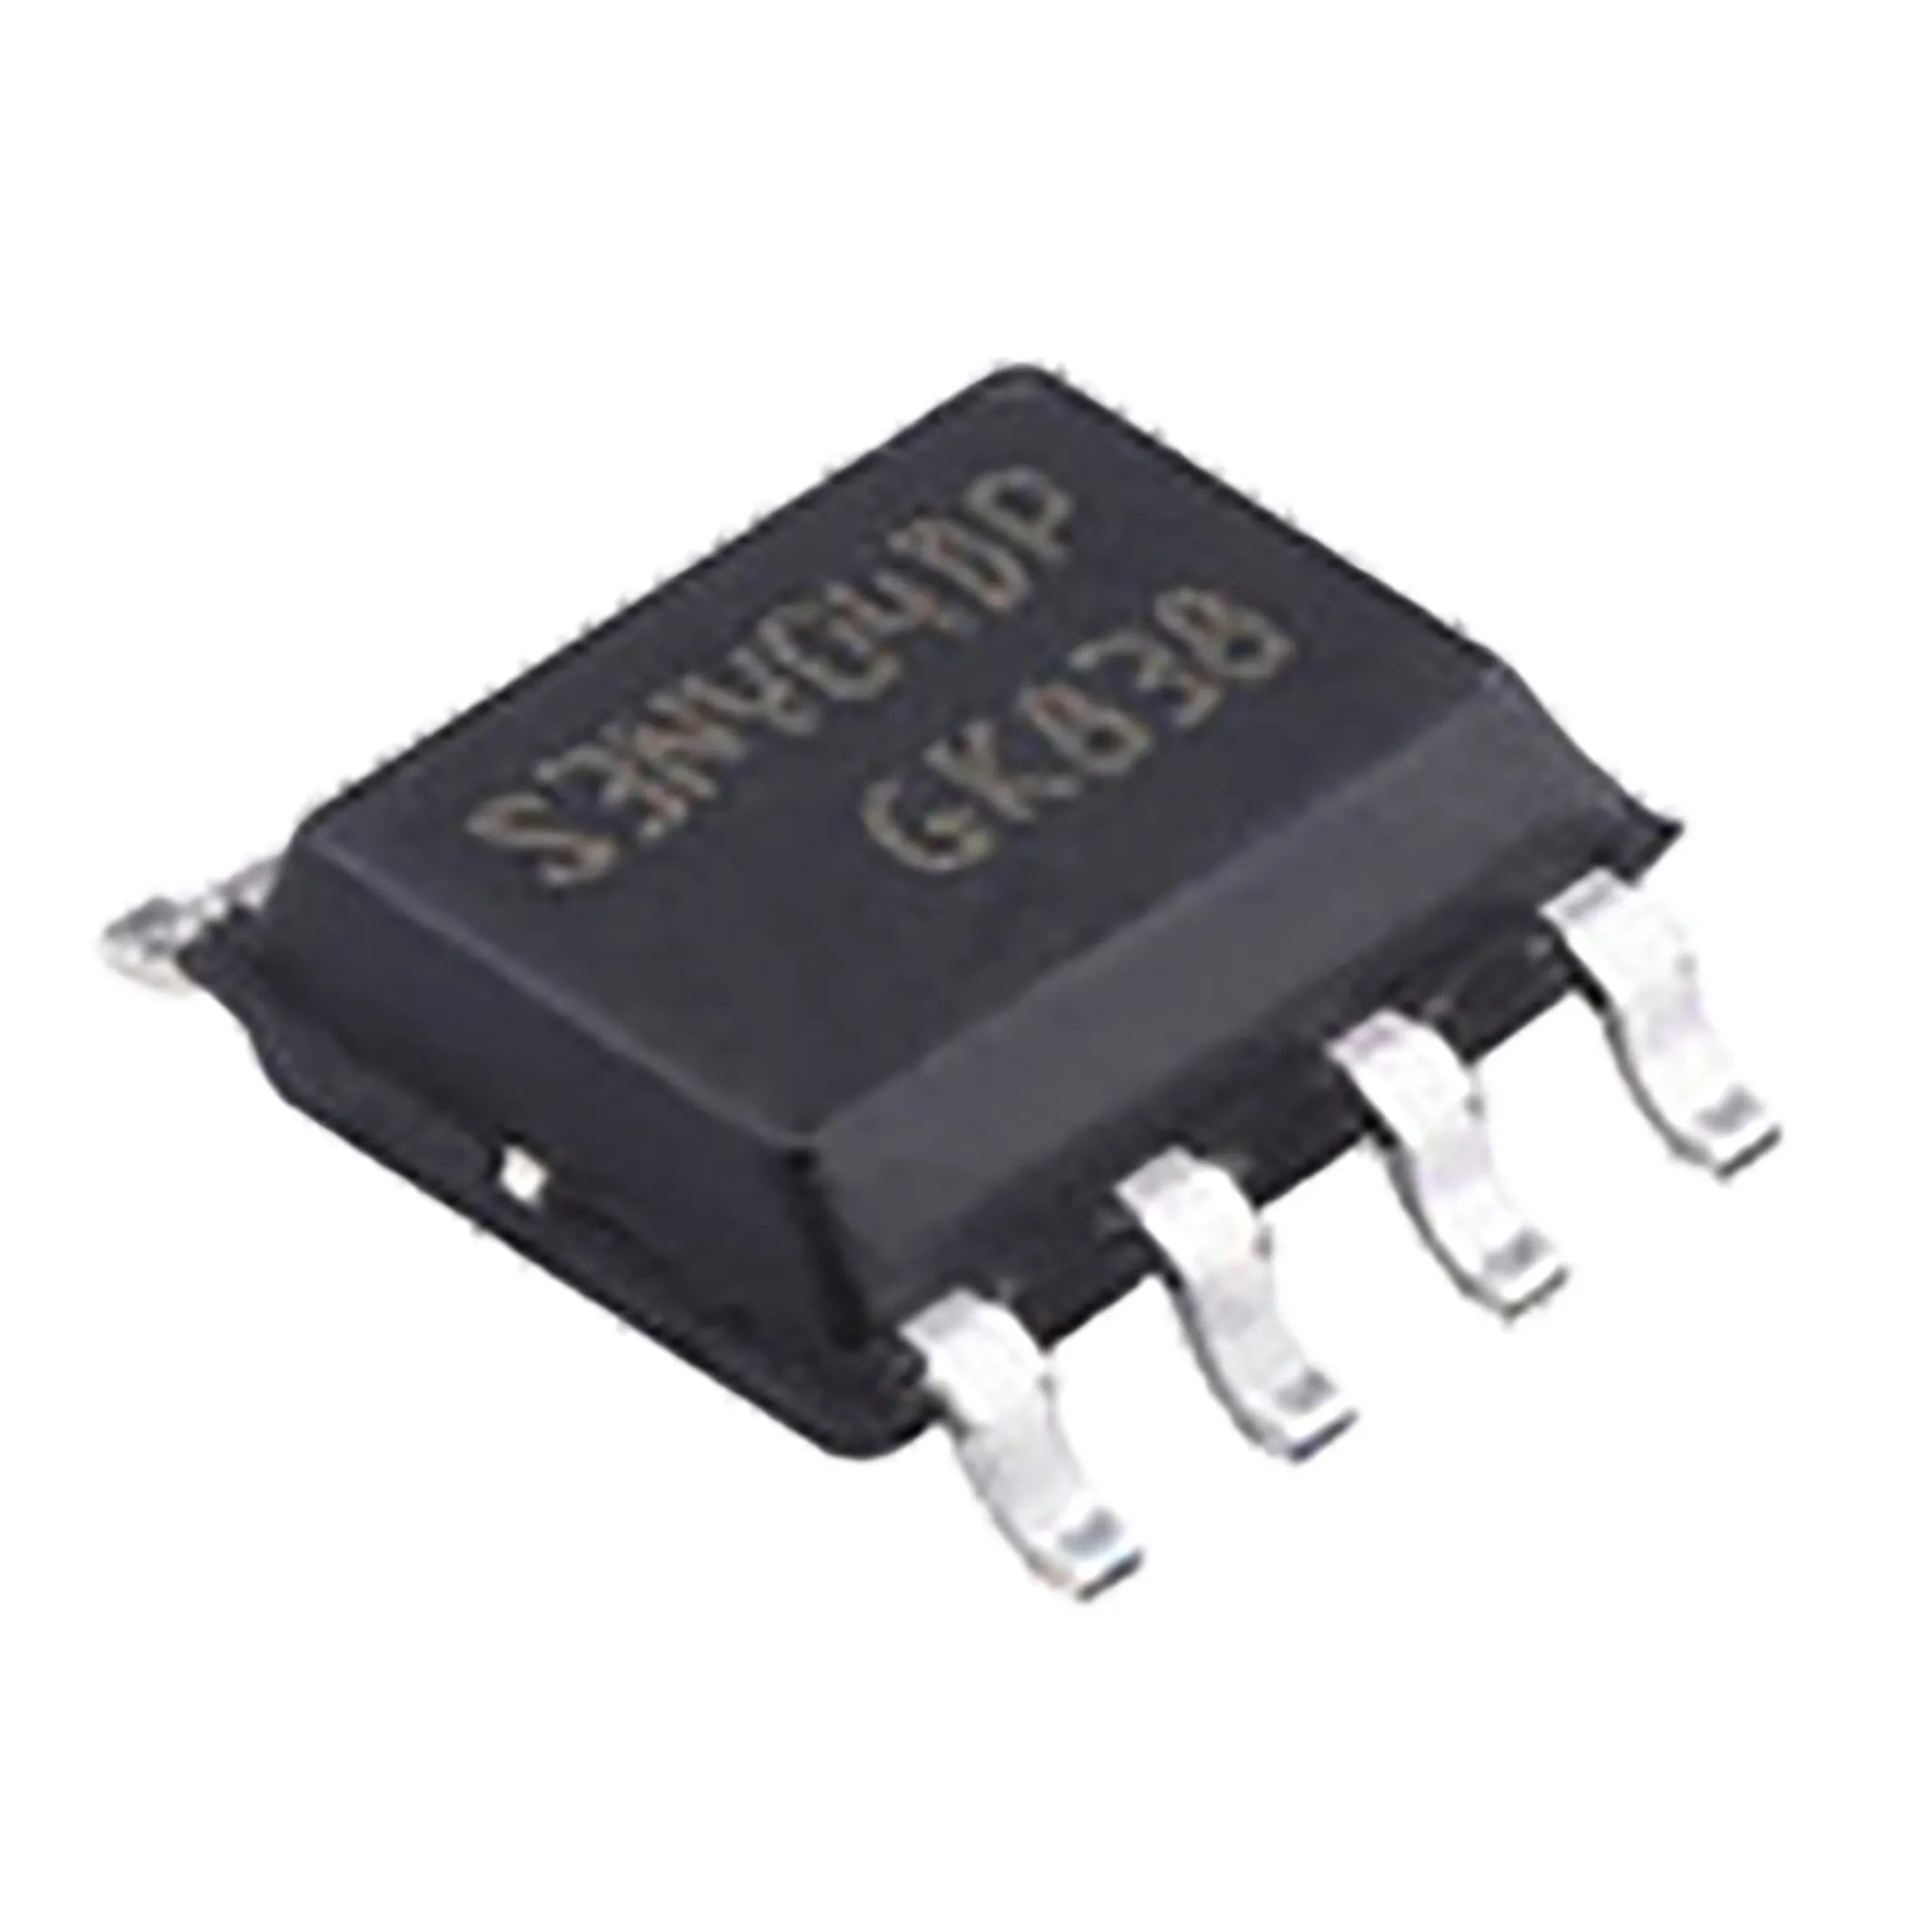 LORIDA-VNS1NV04DPTR-E SOP8, nuevo y original, controlador ic, componentes, módulo PICS BOM, circuito integrado de Chip Mcu Ic